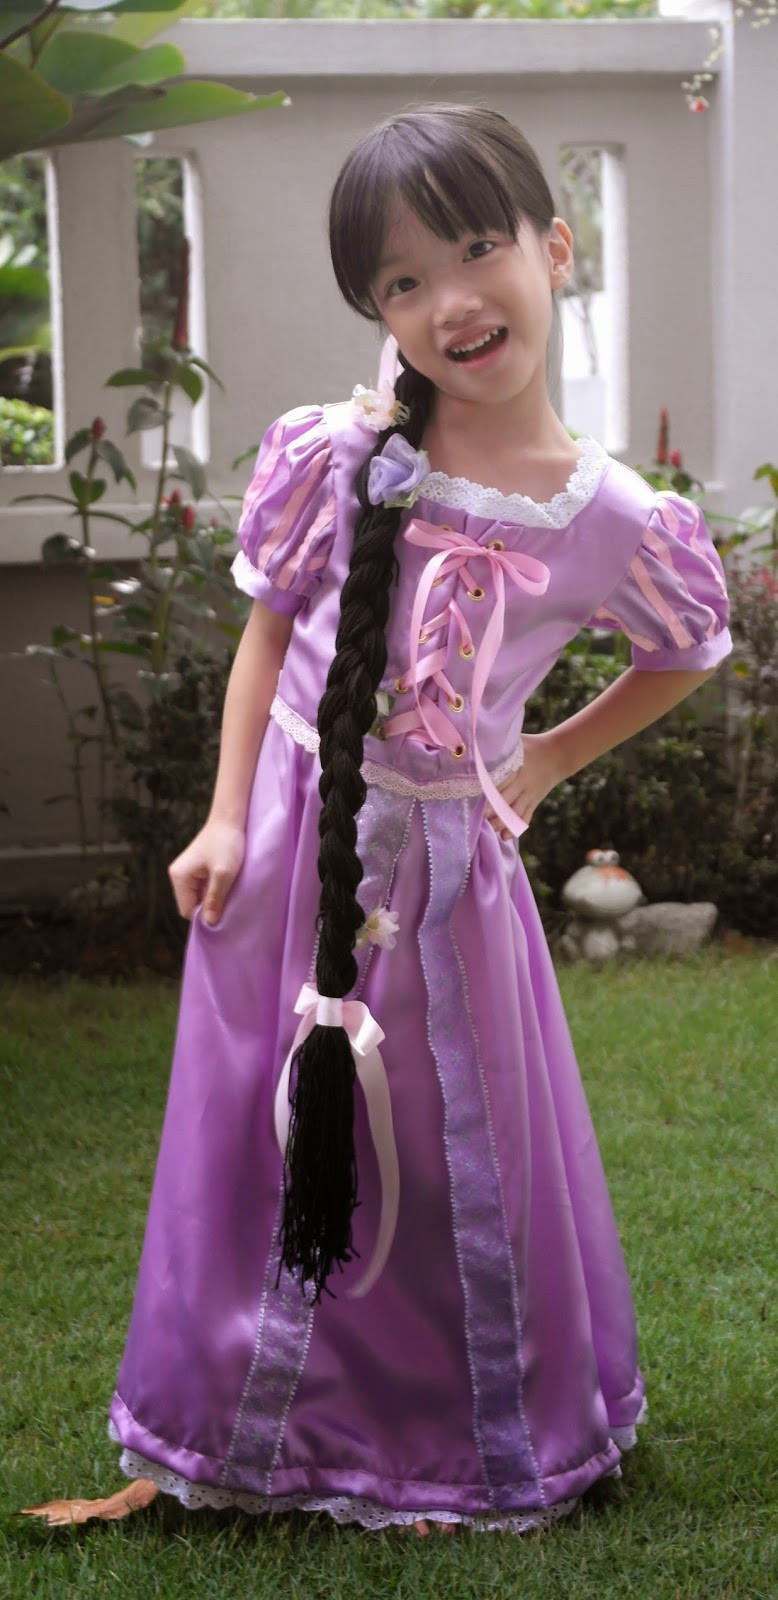 Best ideas about Rapunzel Costume DIY
. Save or Pin DIY Rapunzel Costume Now.